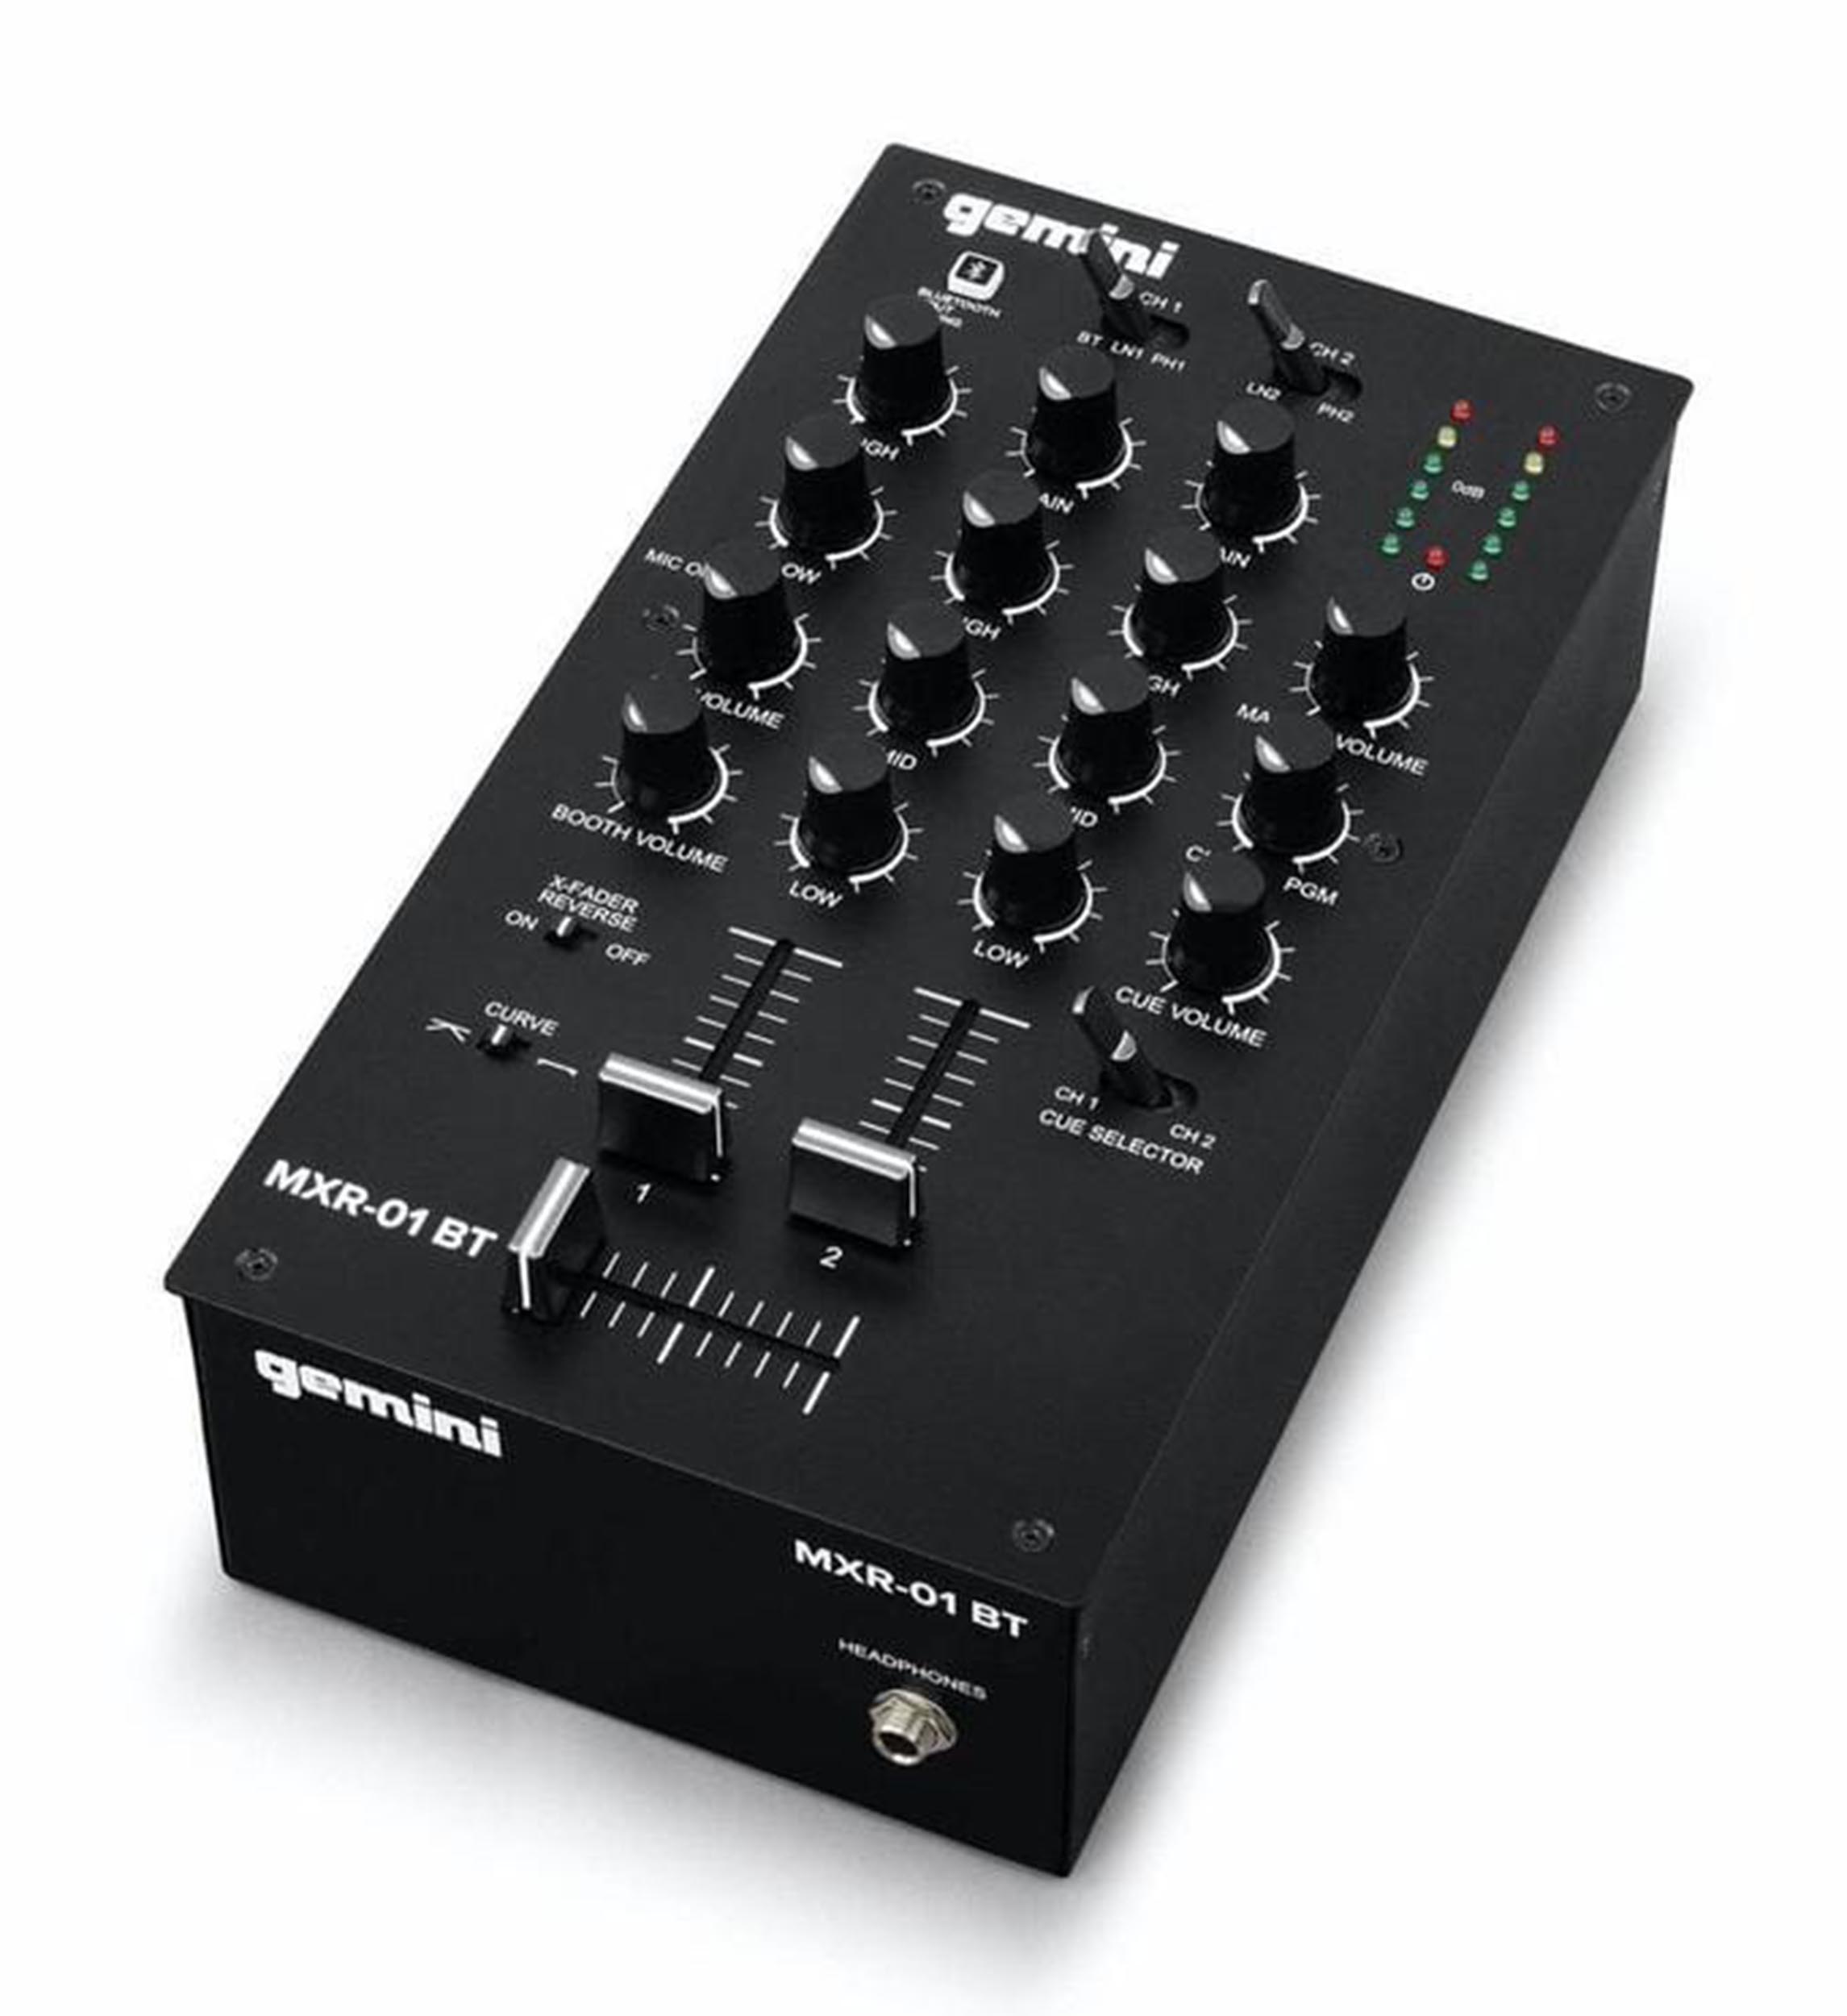 Gemini Sound MXR-01BT, 2-Channel Professional Dj Mixer with Bluetooth Input - Hollywood DJ